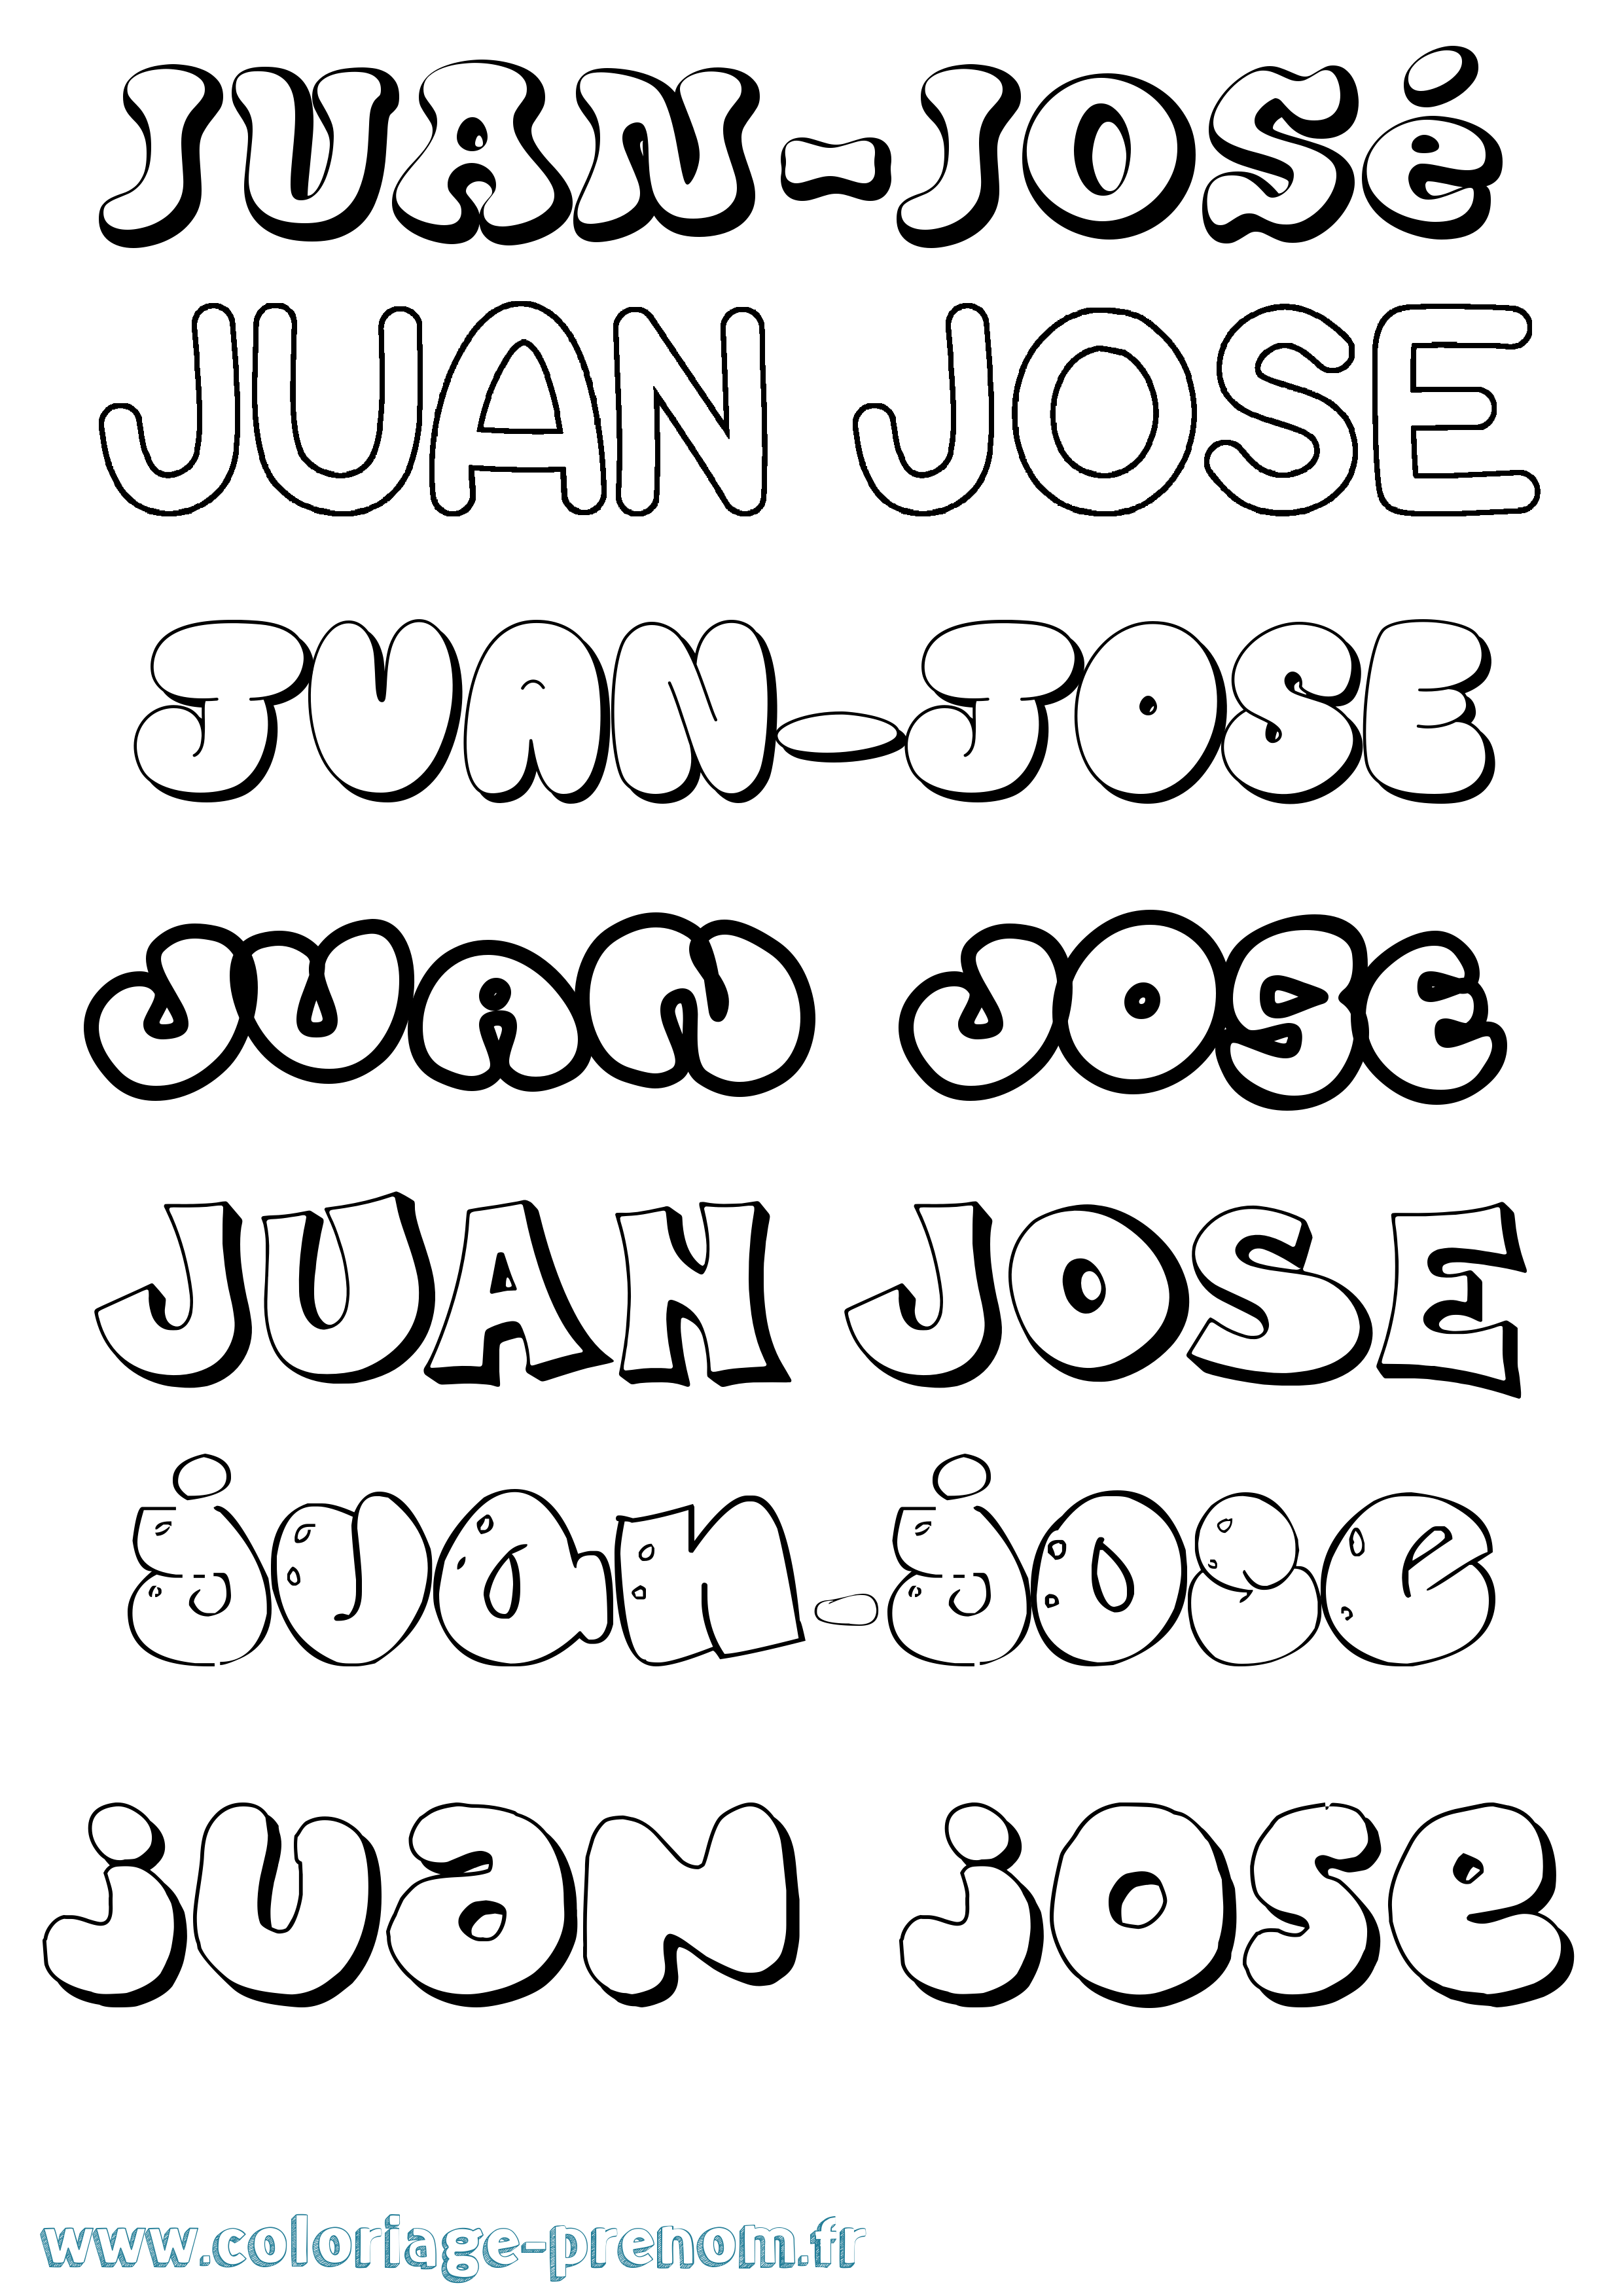 Coloriage prénom Juan-José Bubble